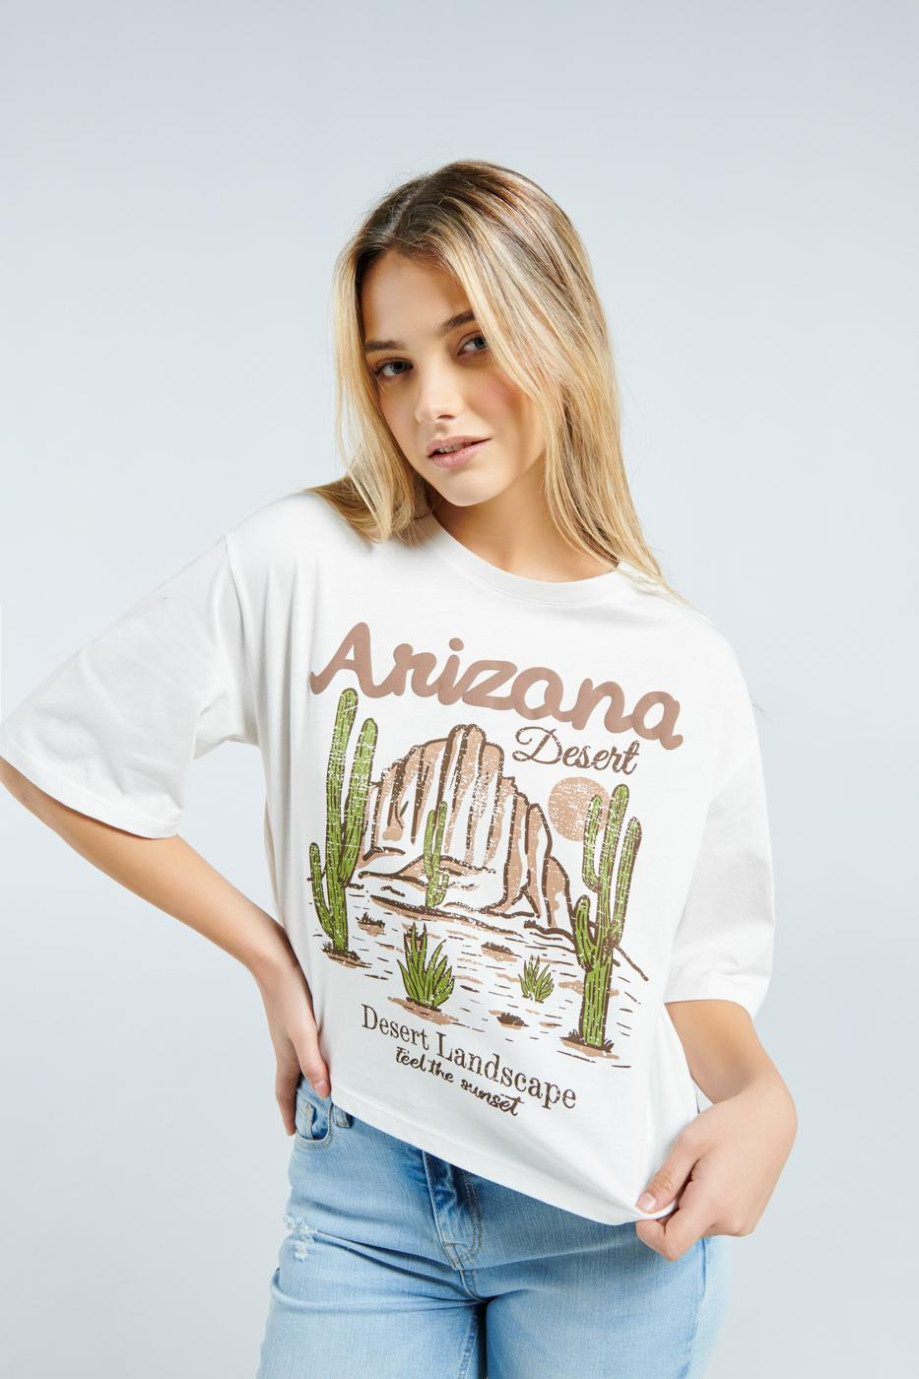 Camiseta crop top crema clara oversize con diseño college de Arizona